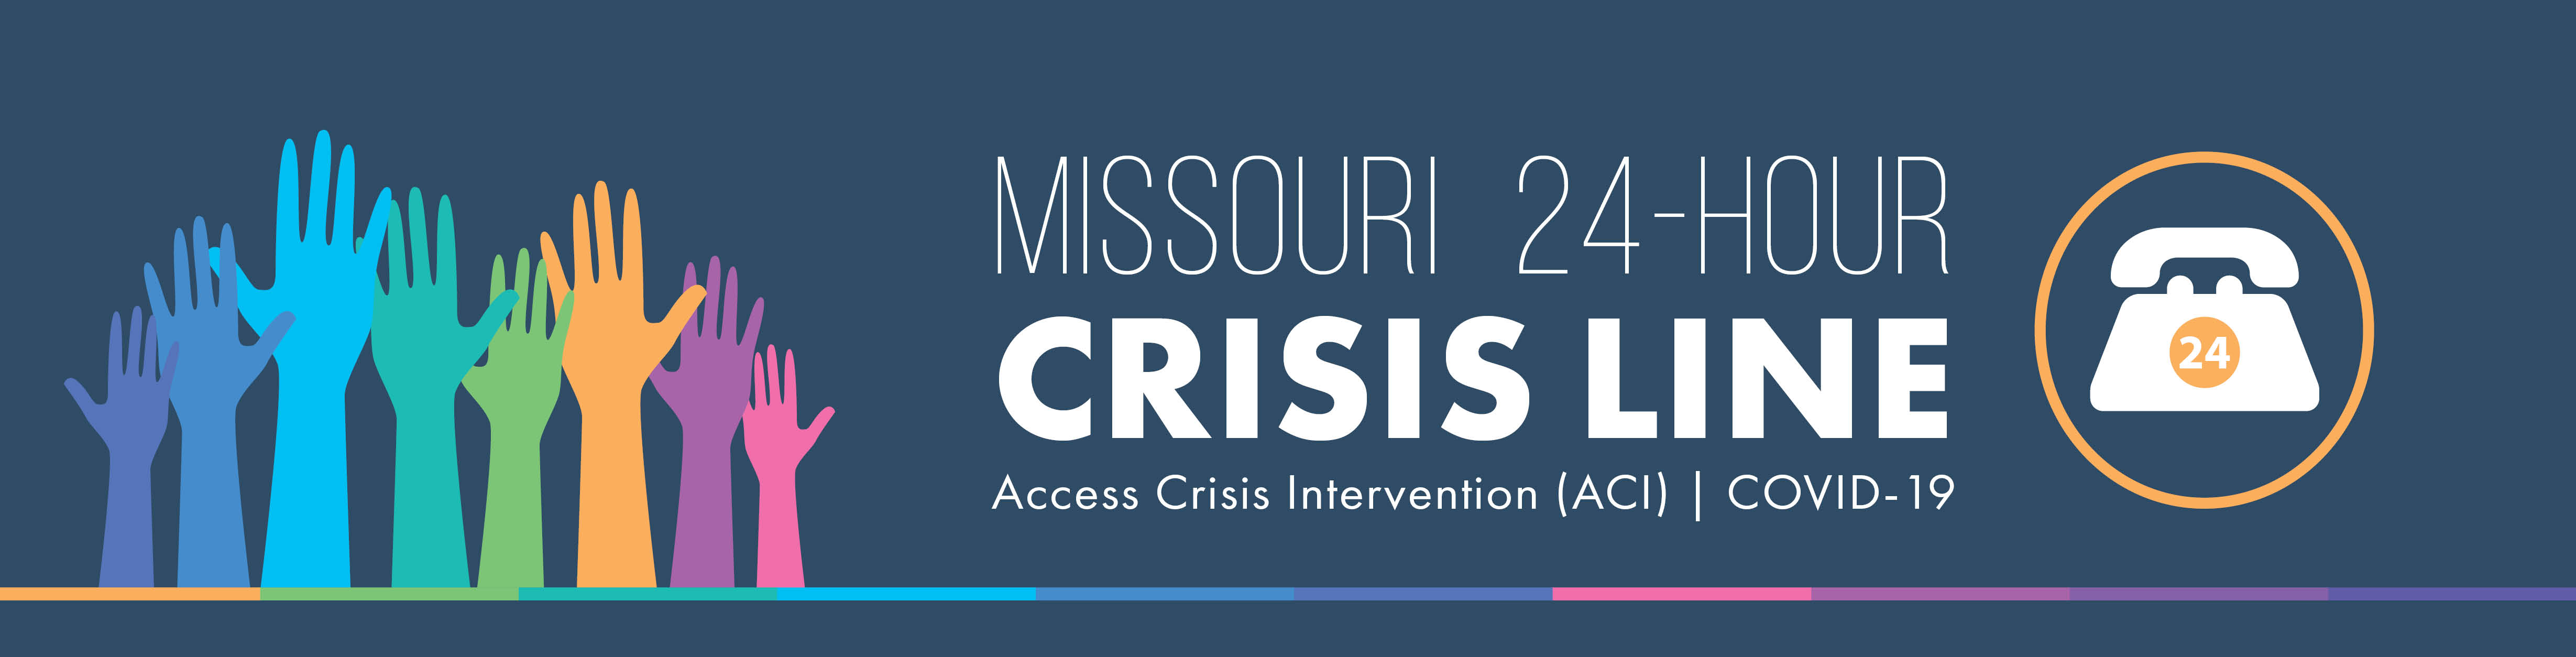 Missouri 24 - Hour Crisis Line Access Crisis Intervention (ACI) COVID-19